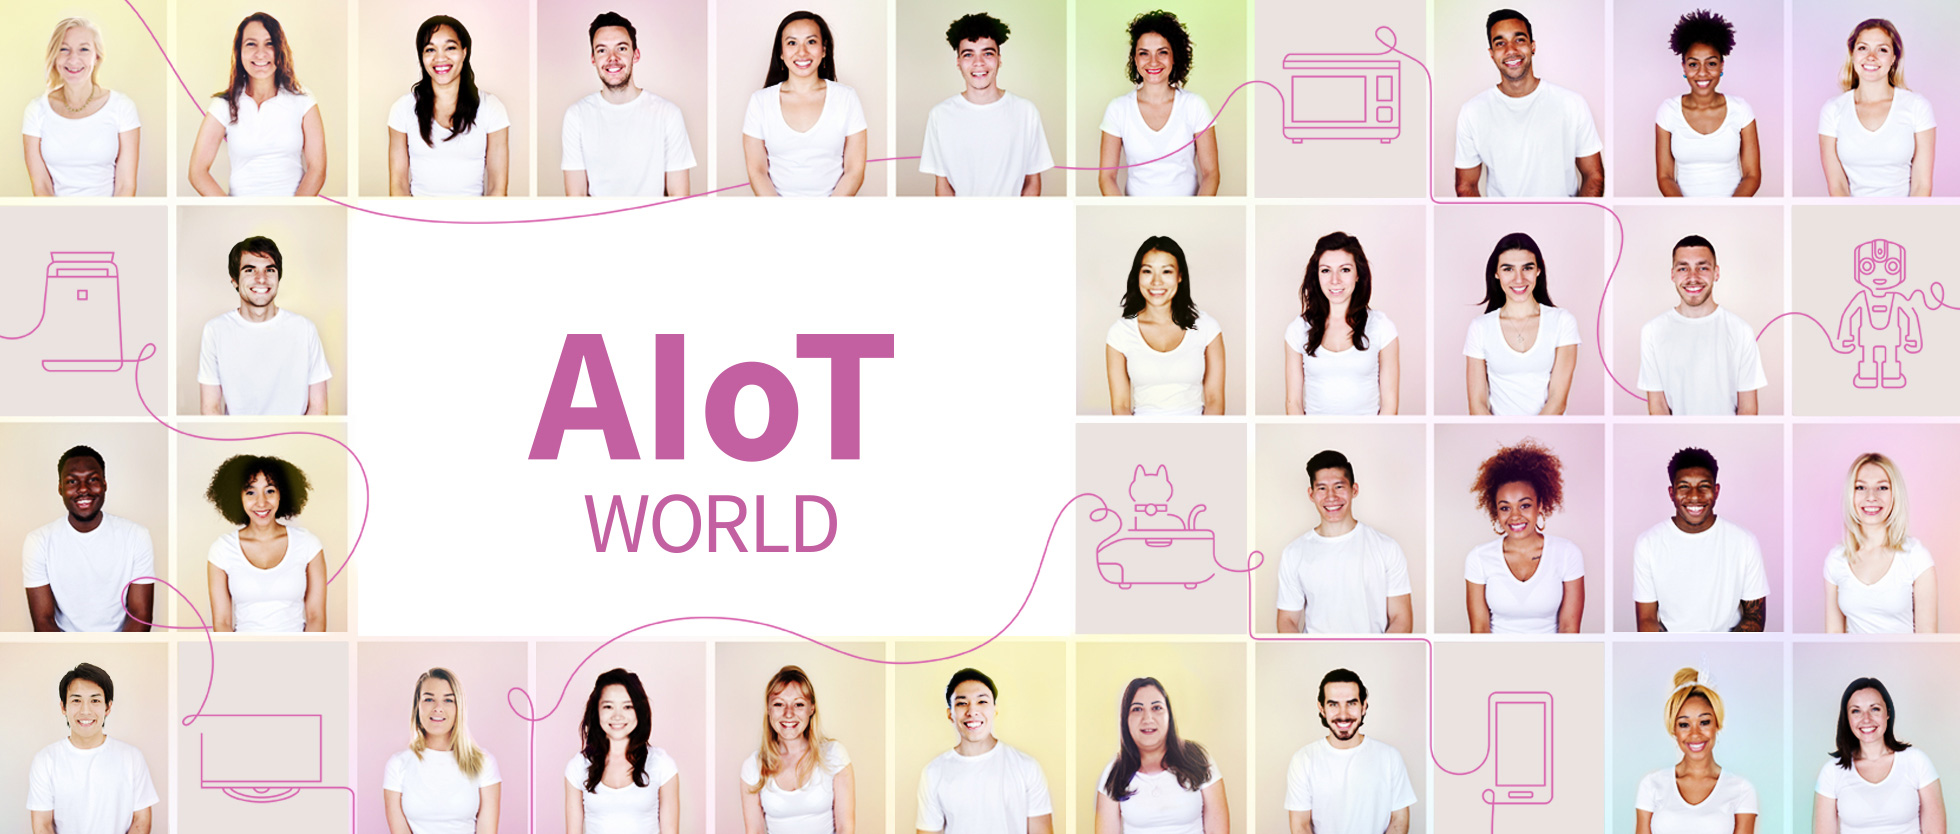 AIoT World